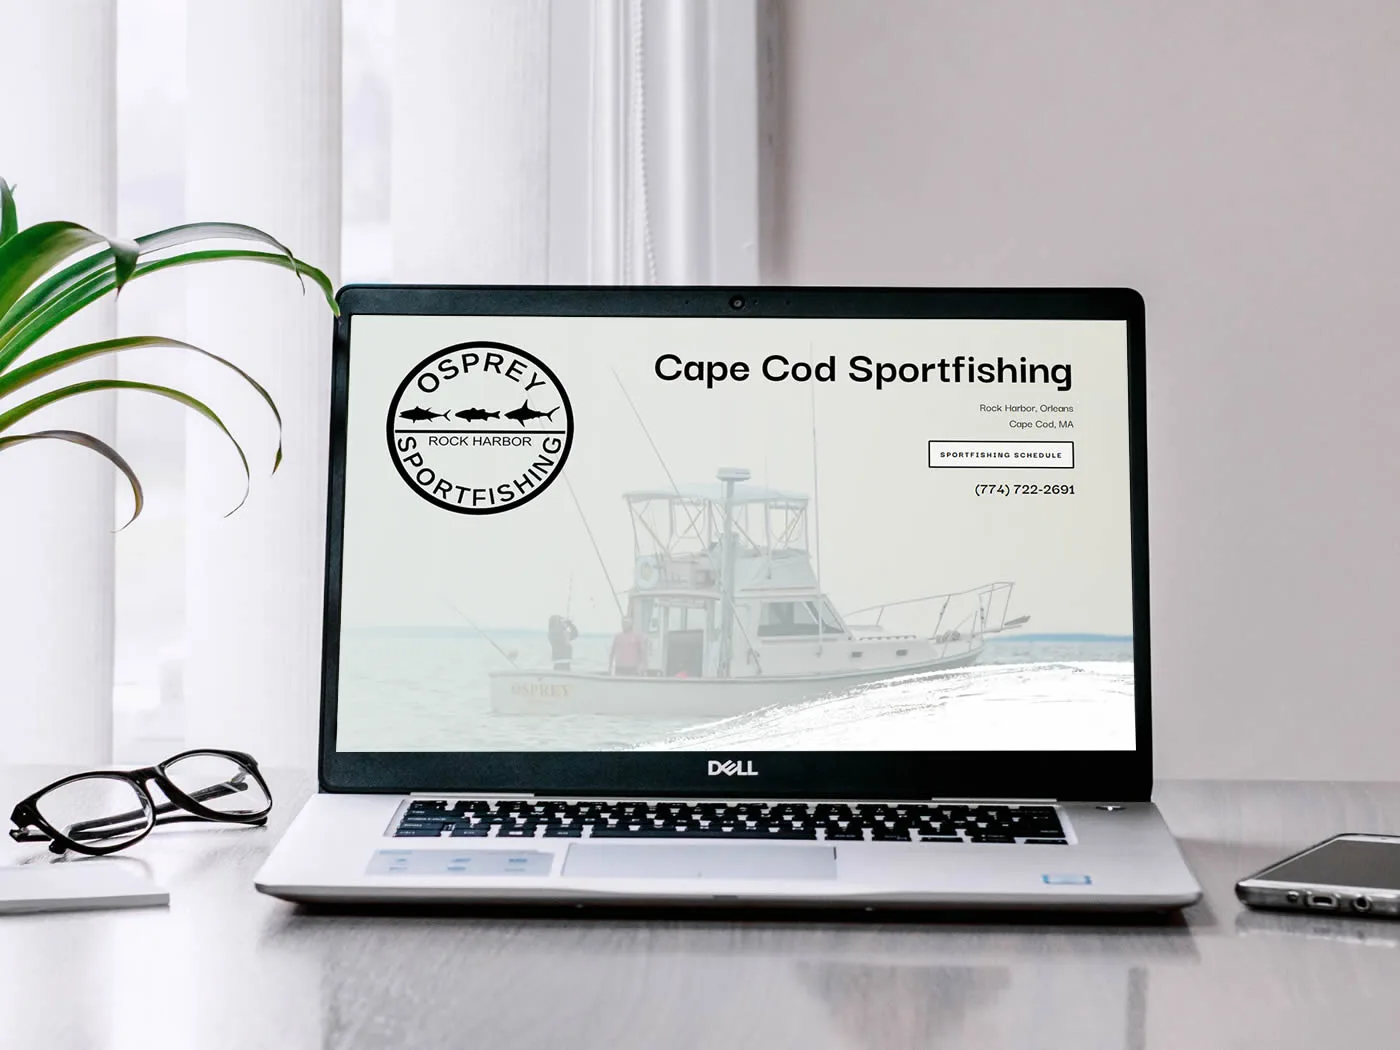 osprey-sportfishing-cape-cod-website-design-lrg